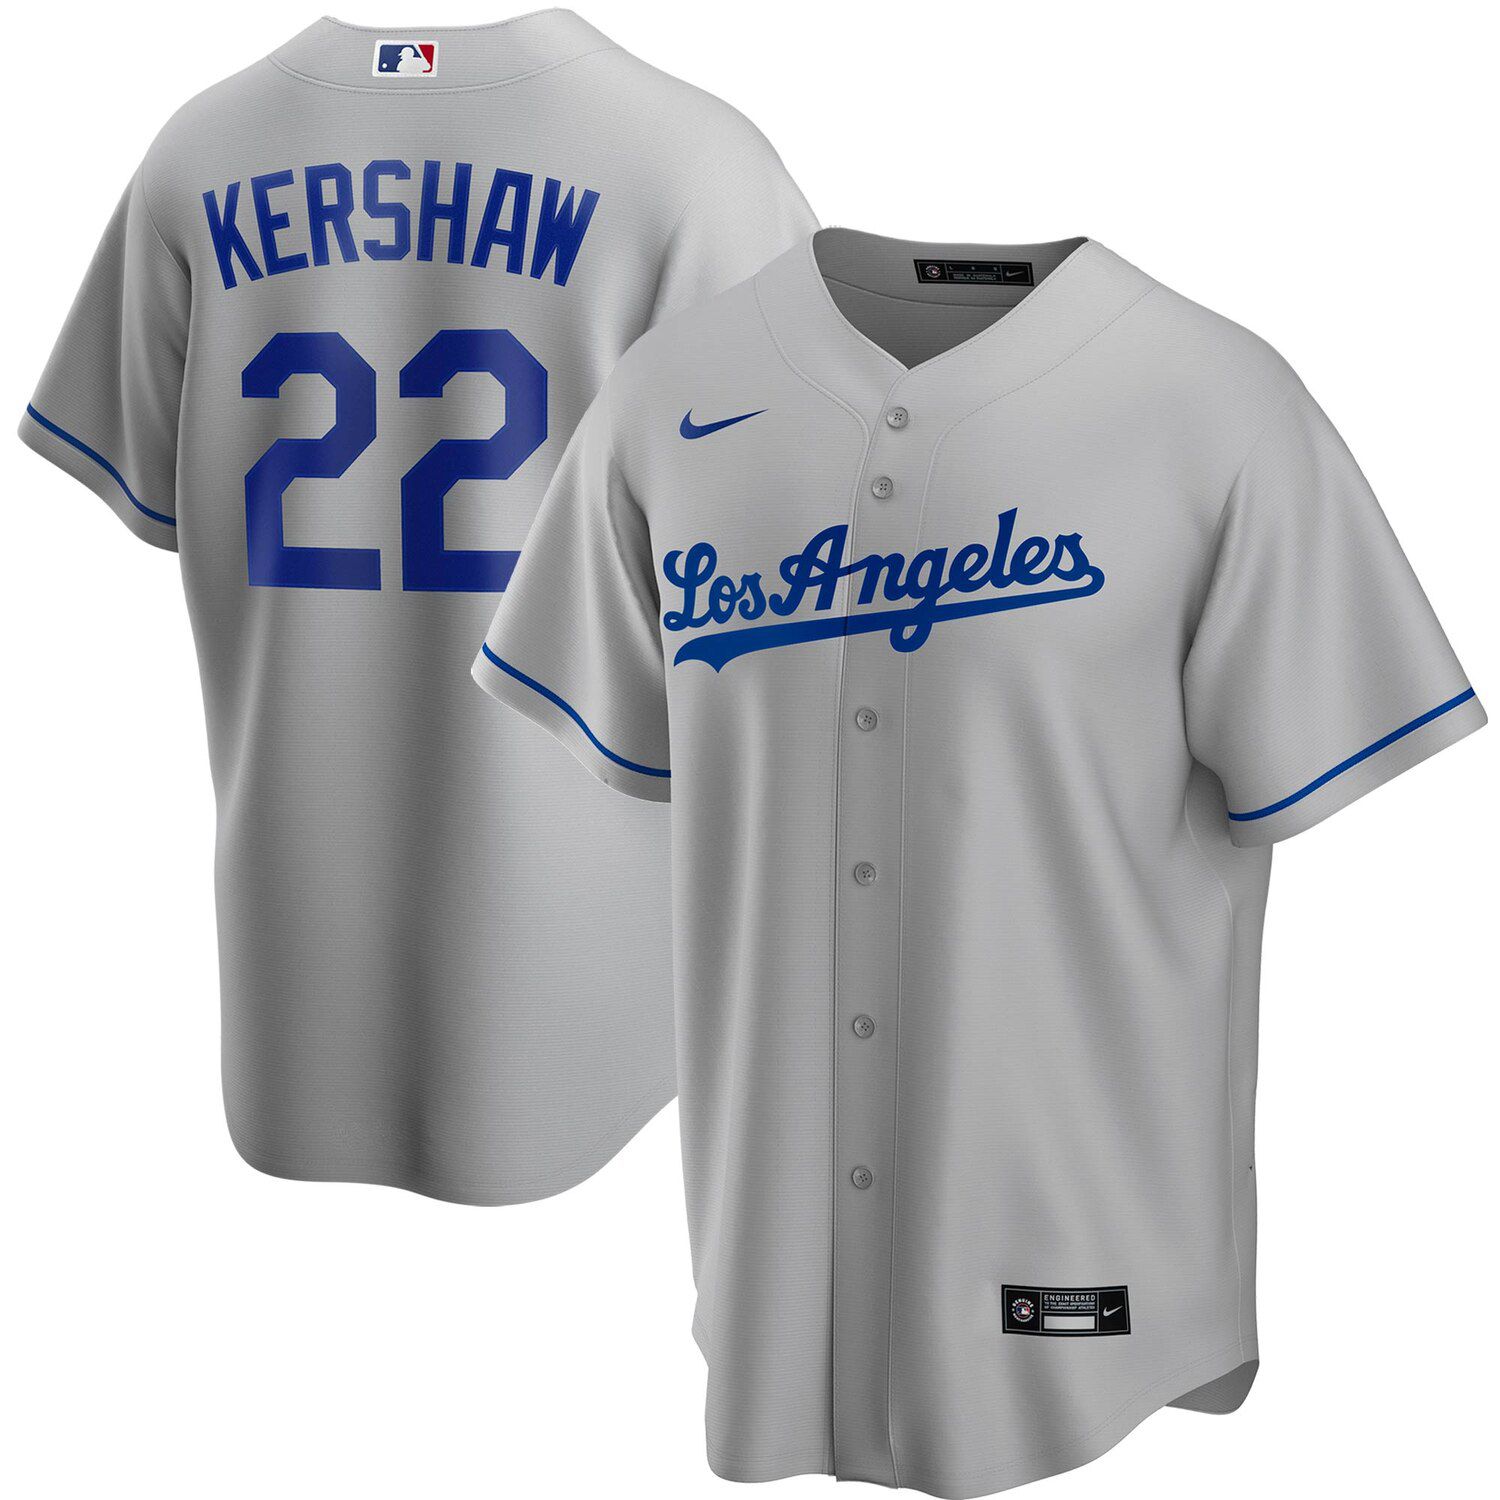 Clayton Kershaw Dodgers jersey